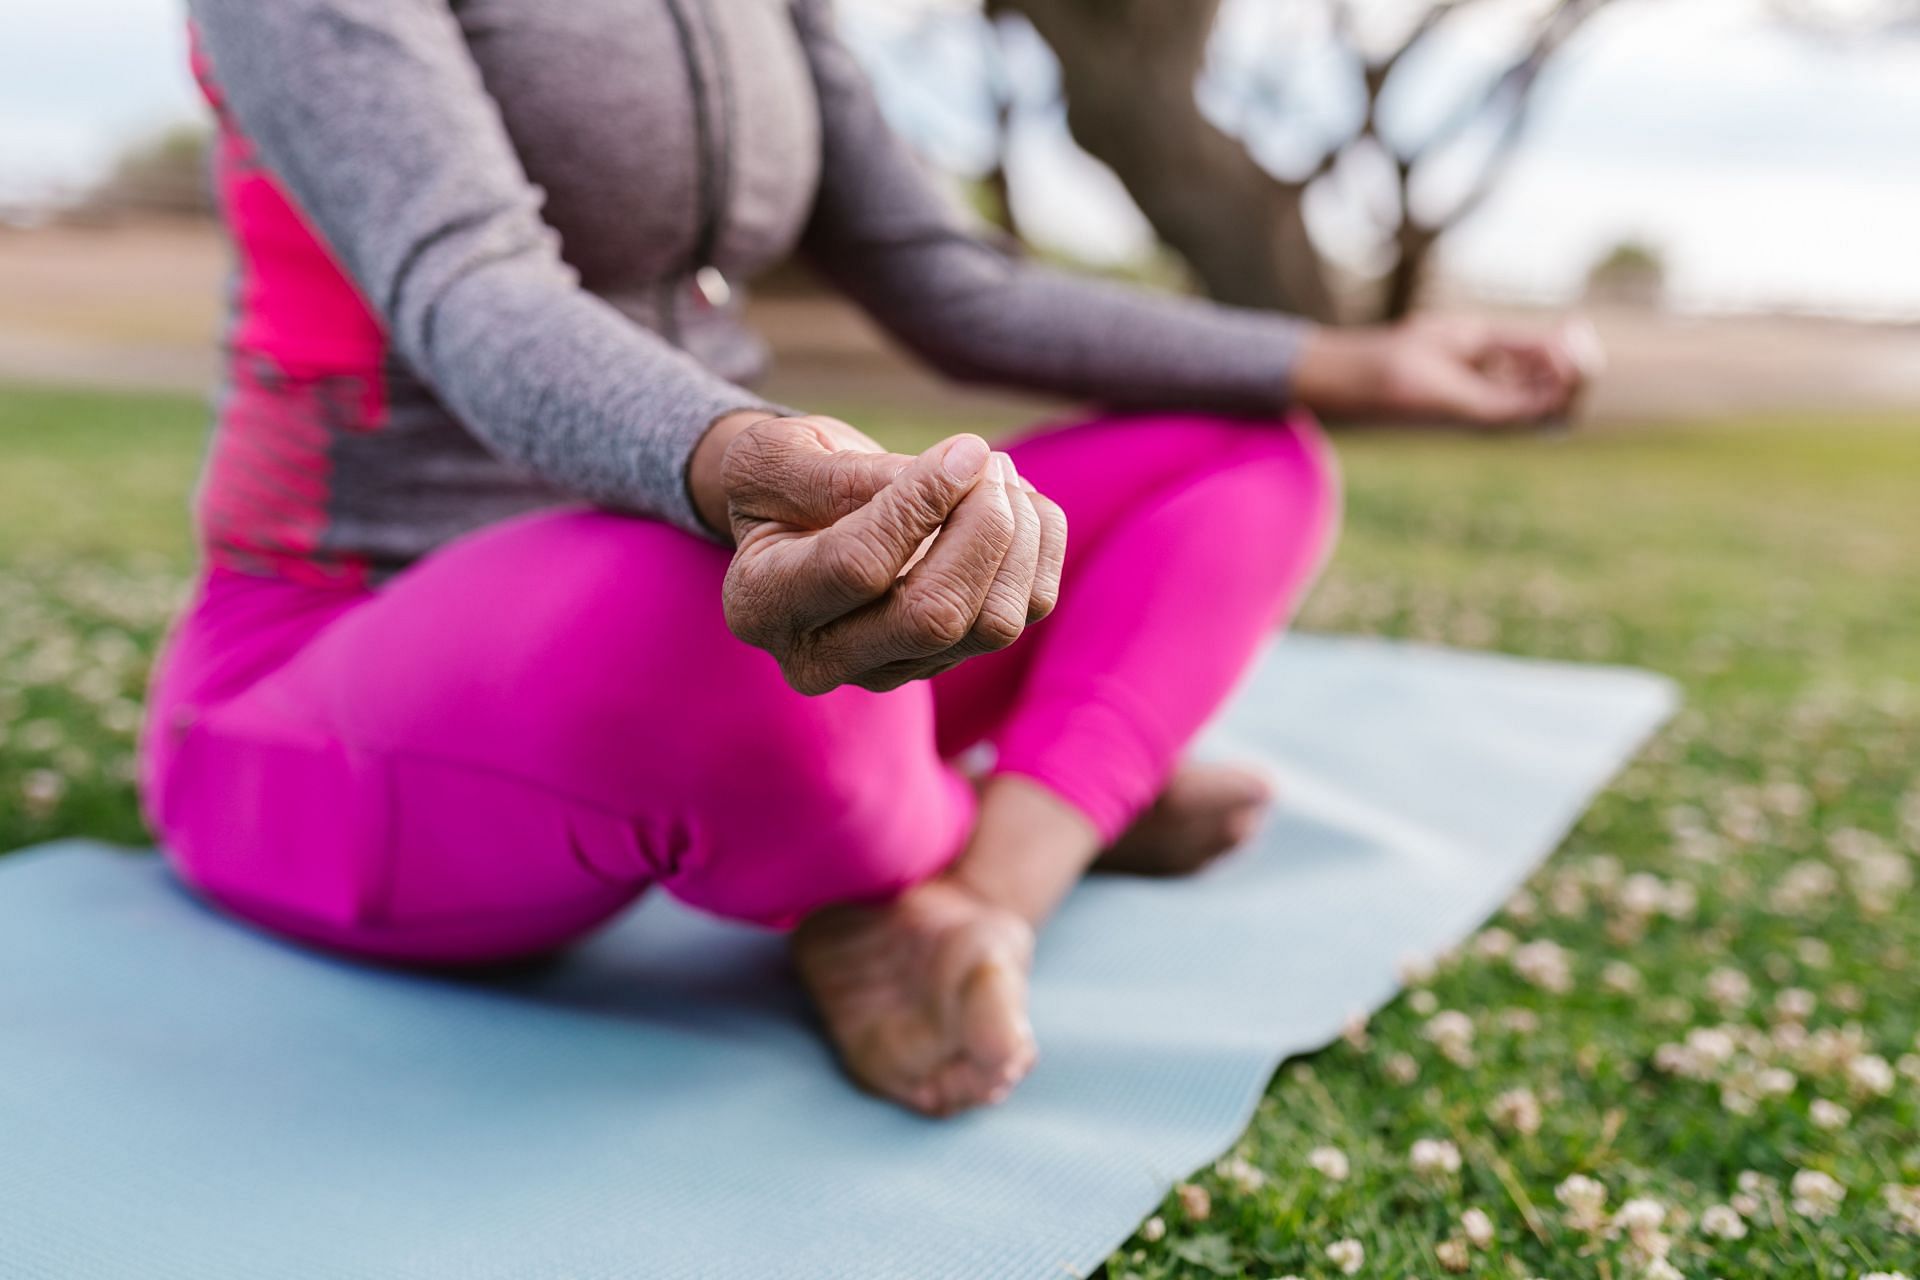 Bikram Yoga Beginner's Guide - Reduce stress, Look younger, Lose